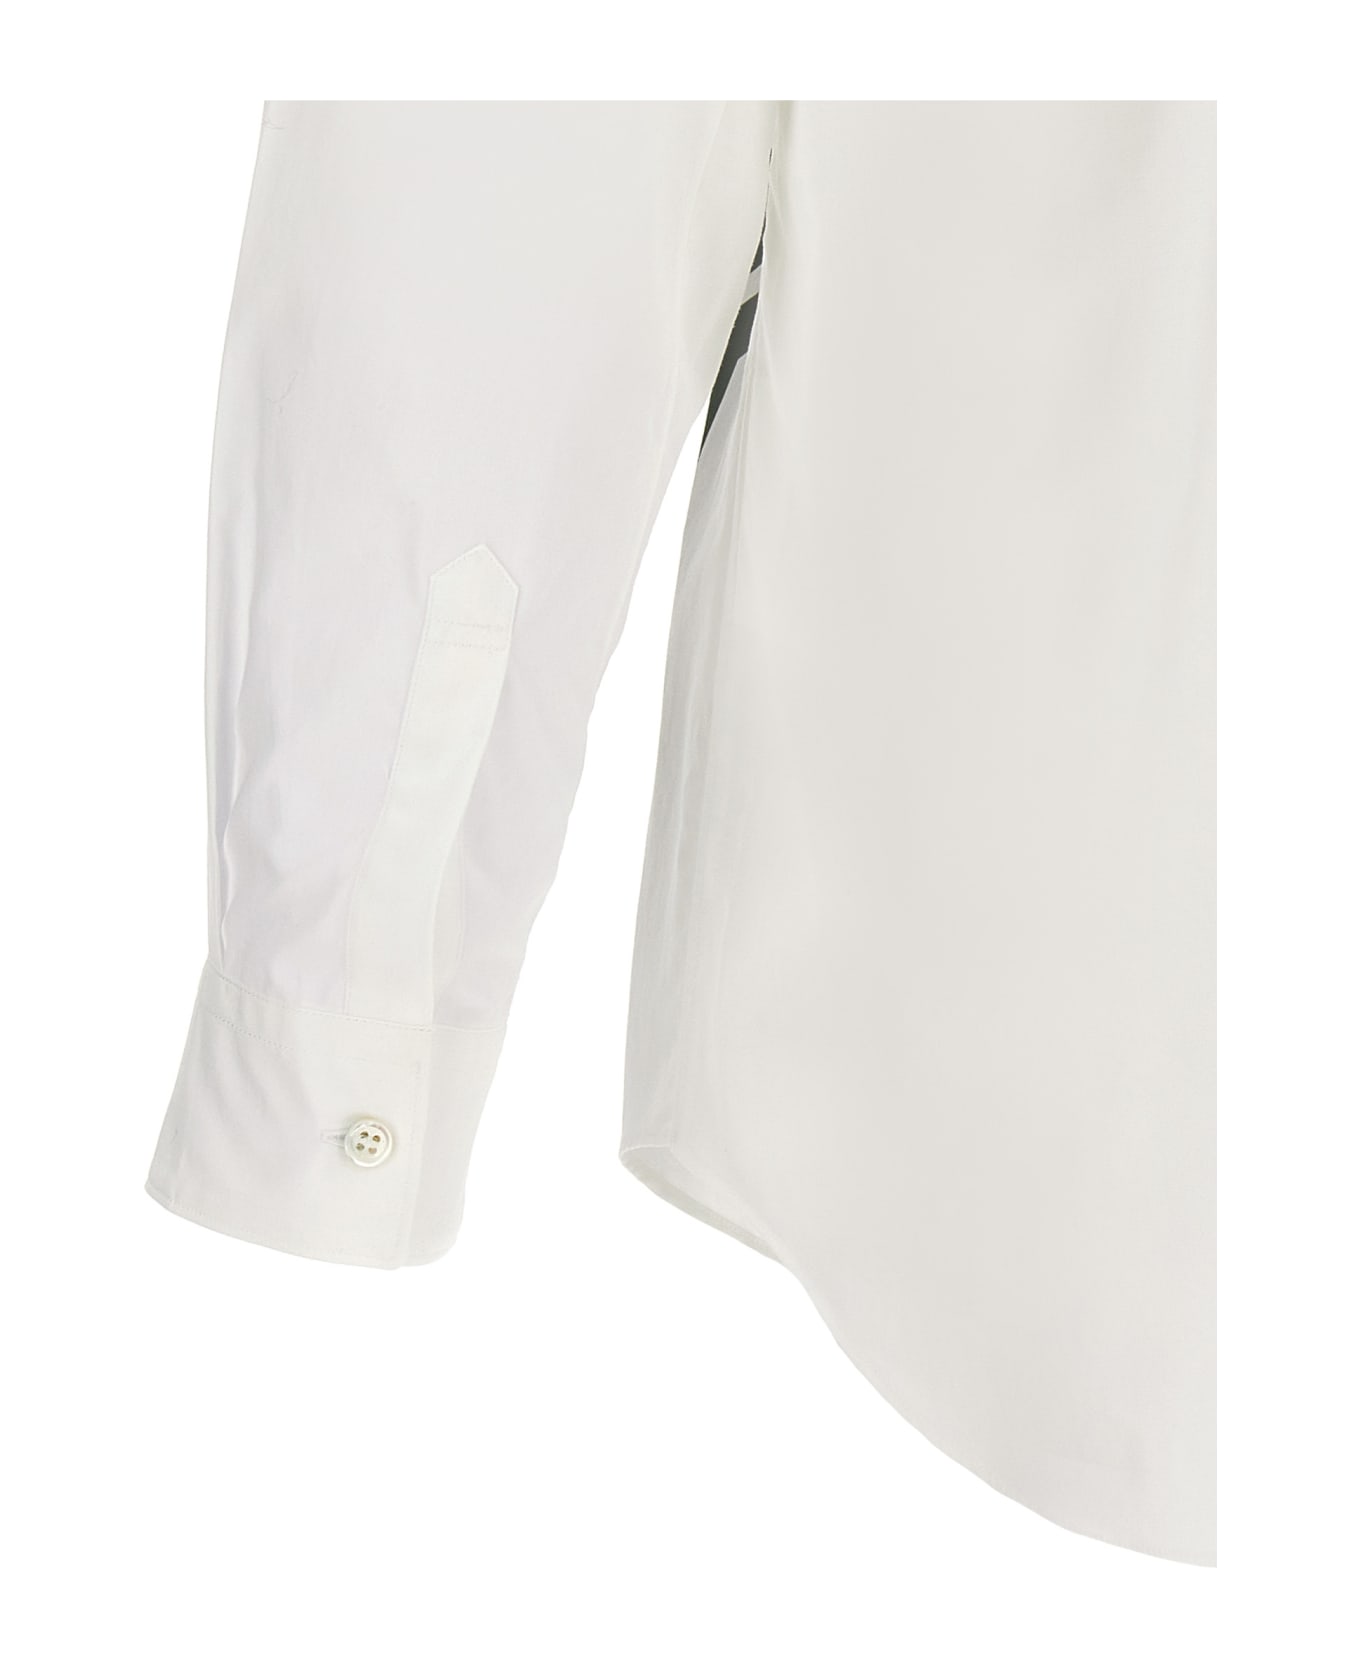 Lacoste X Lacoste Shirt - WHITE